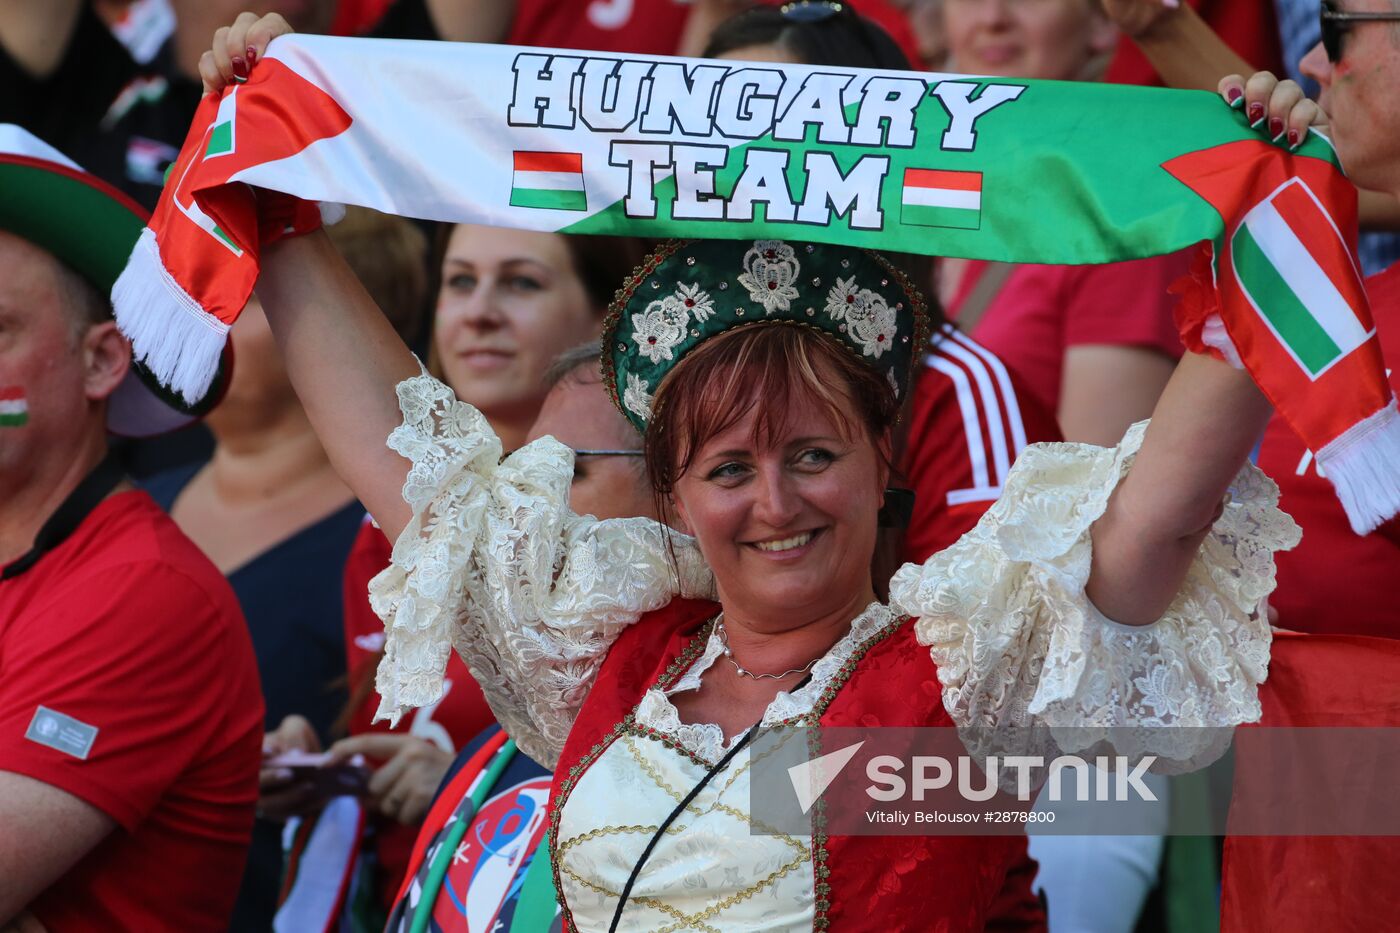 UEFA Euro 2016. Hungary vs. Portugal